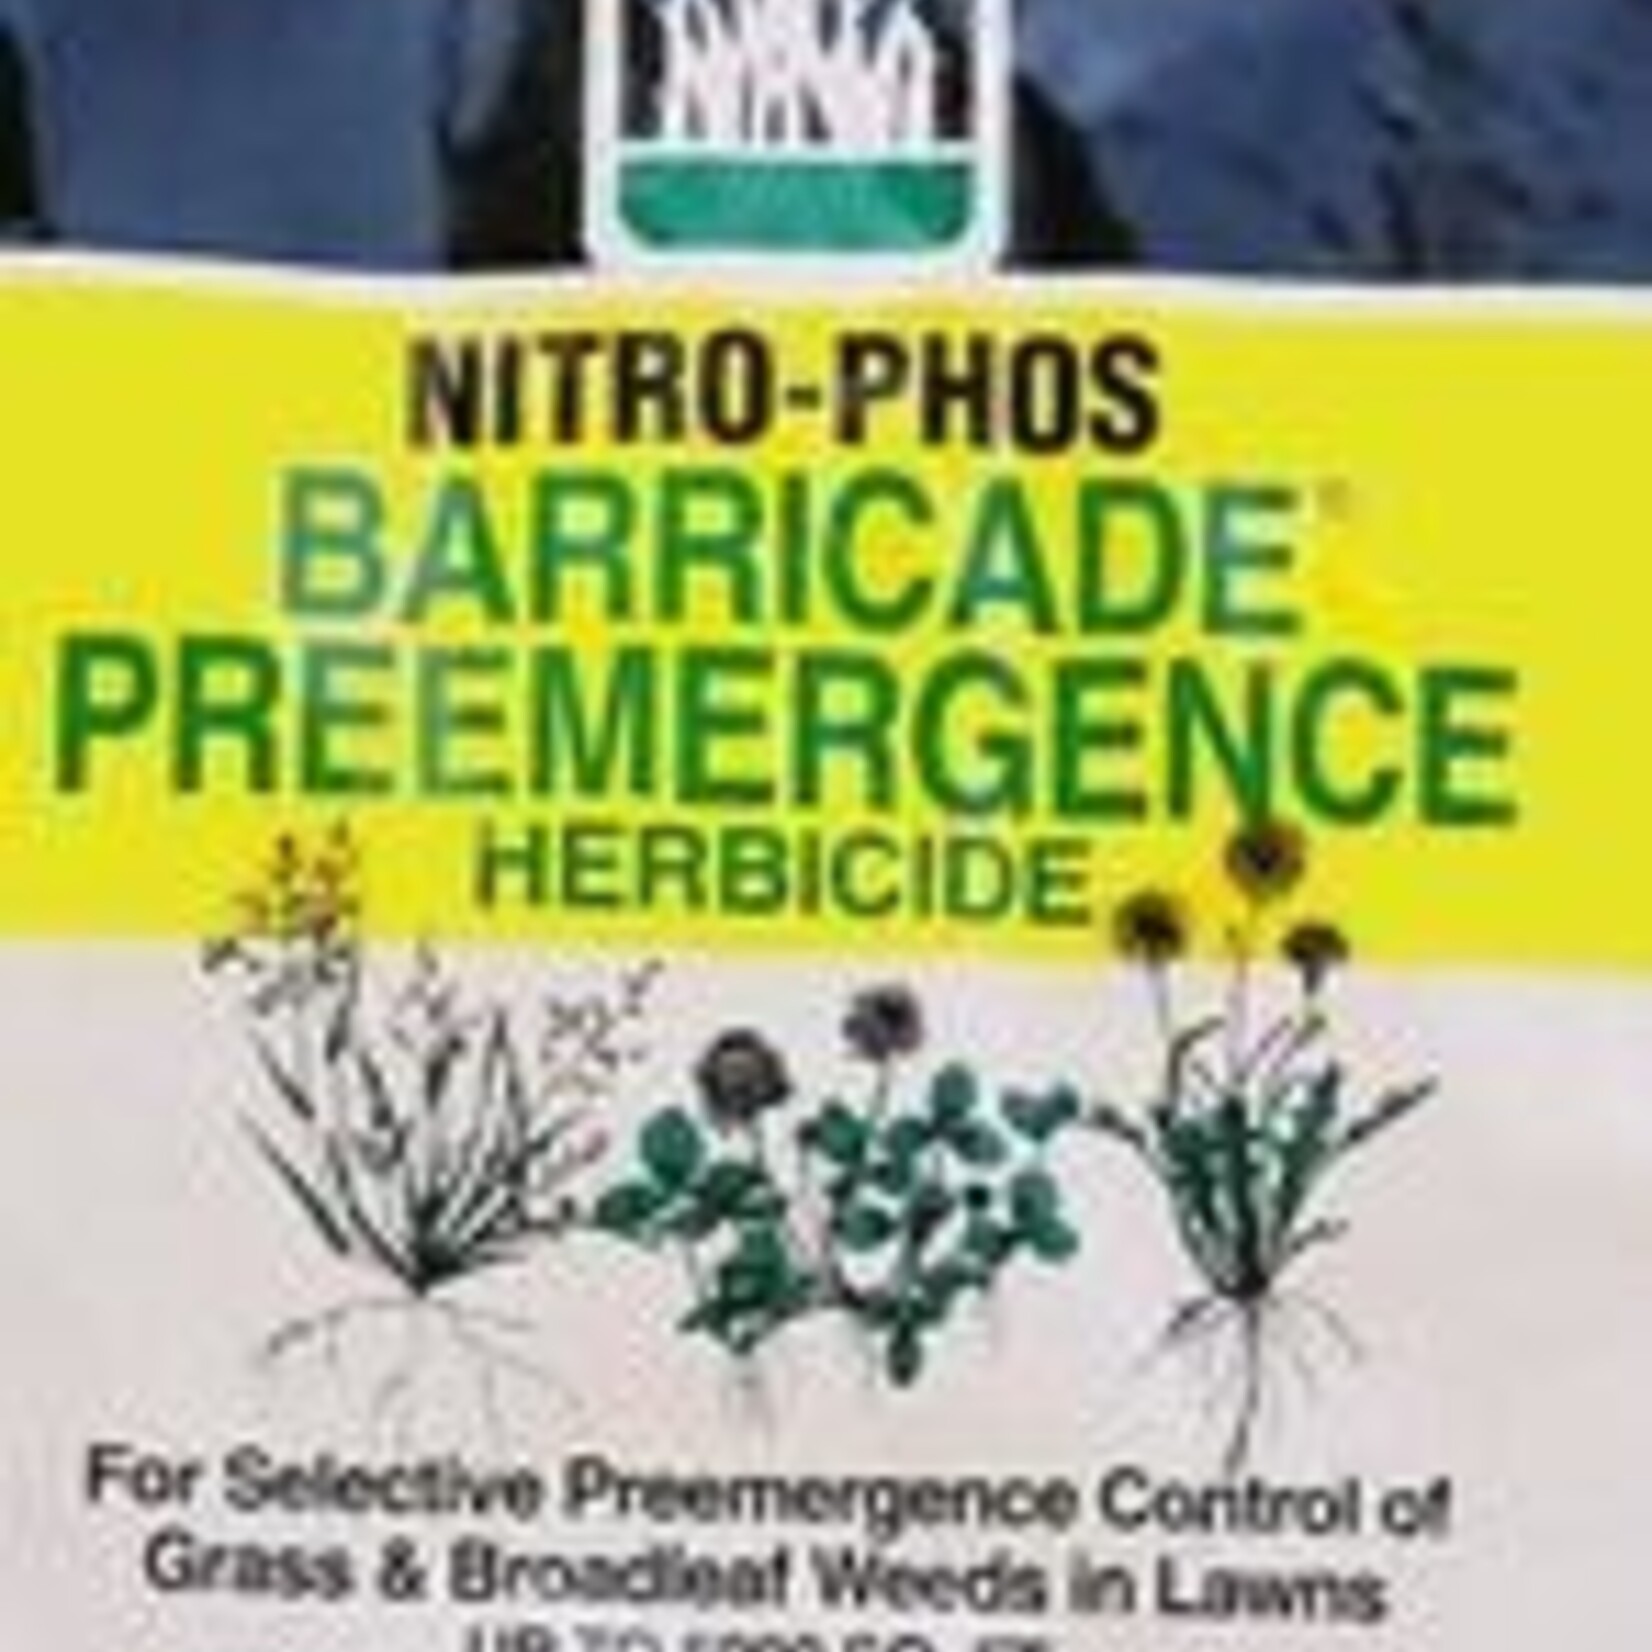 NITRO PHOS BARRICADE 50 lb. 12500 SF coverage